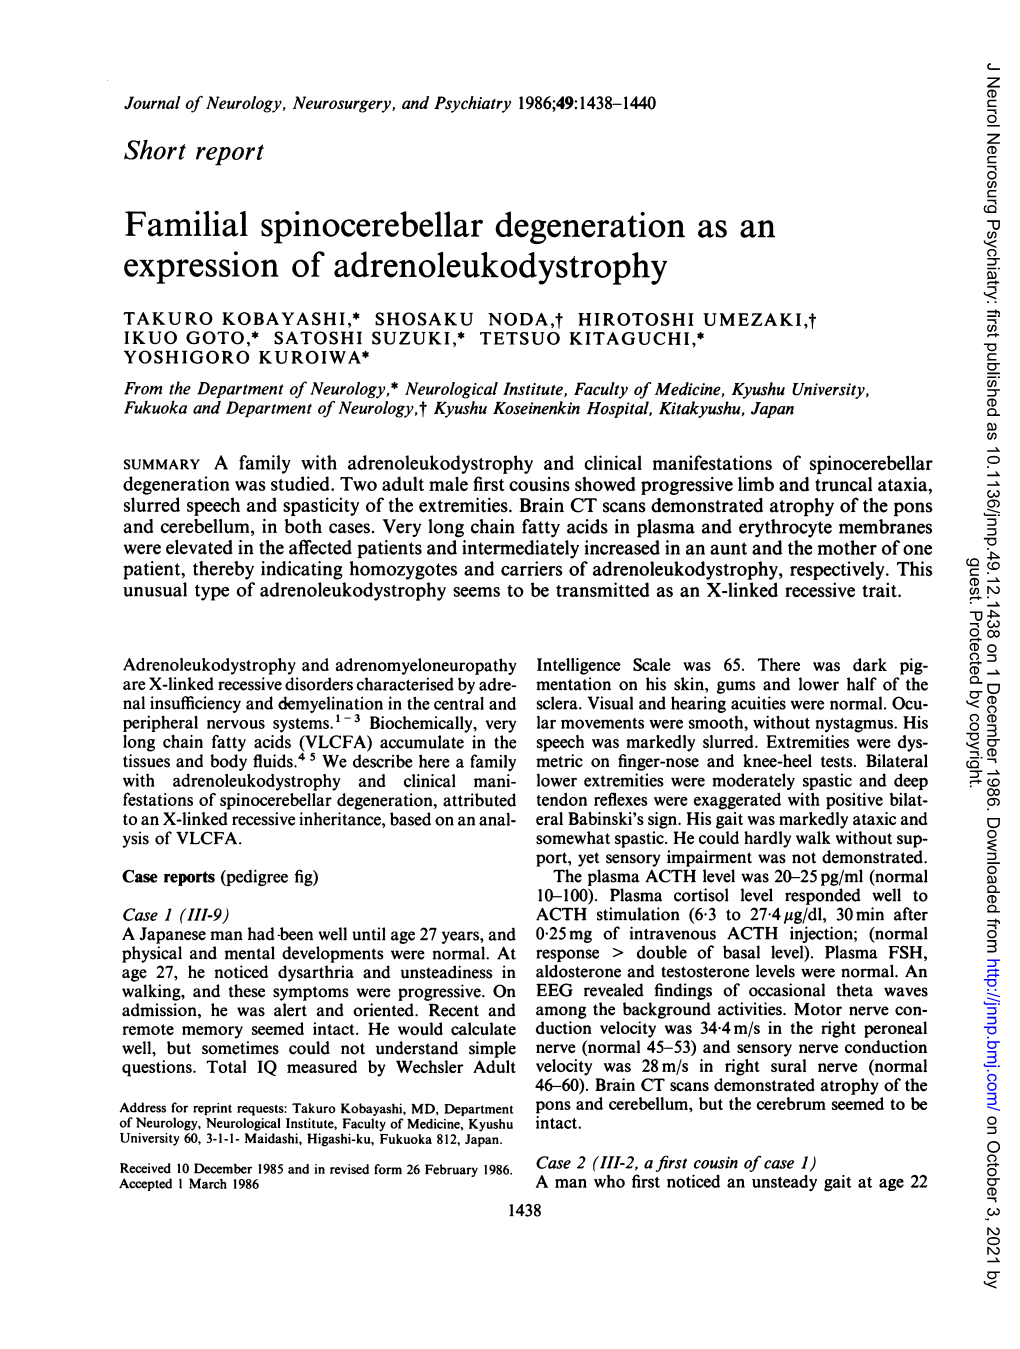 Familial Spinocerebellar Degeneration As an Expression of Adrenoleukodystrophy